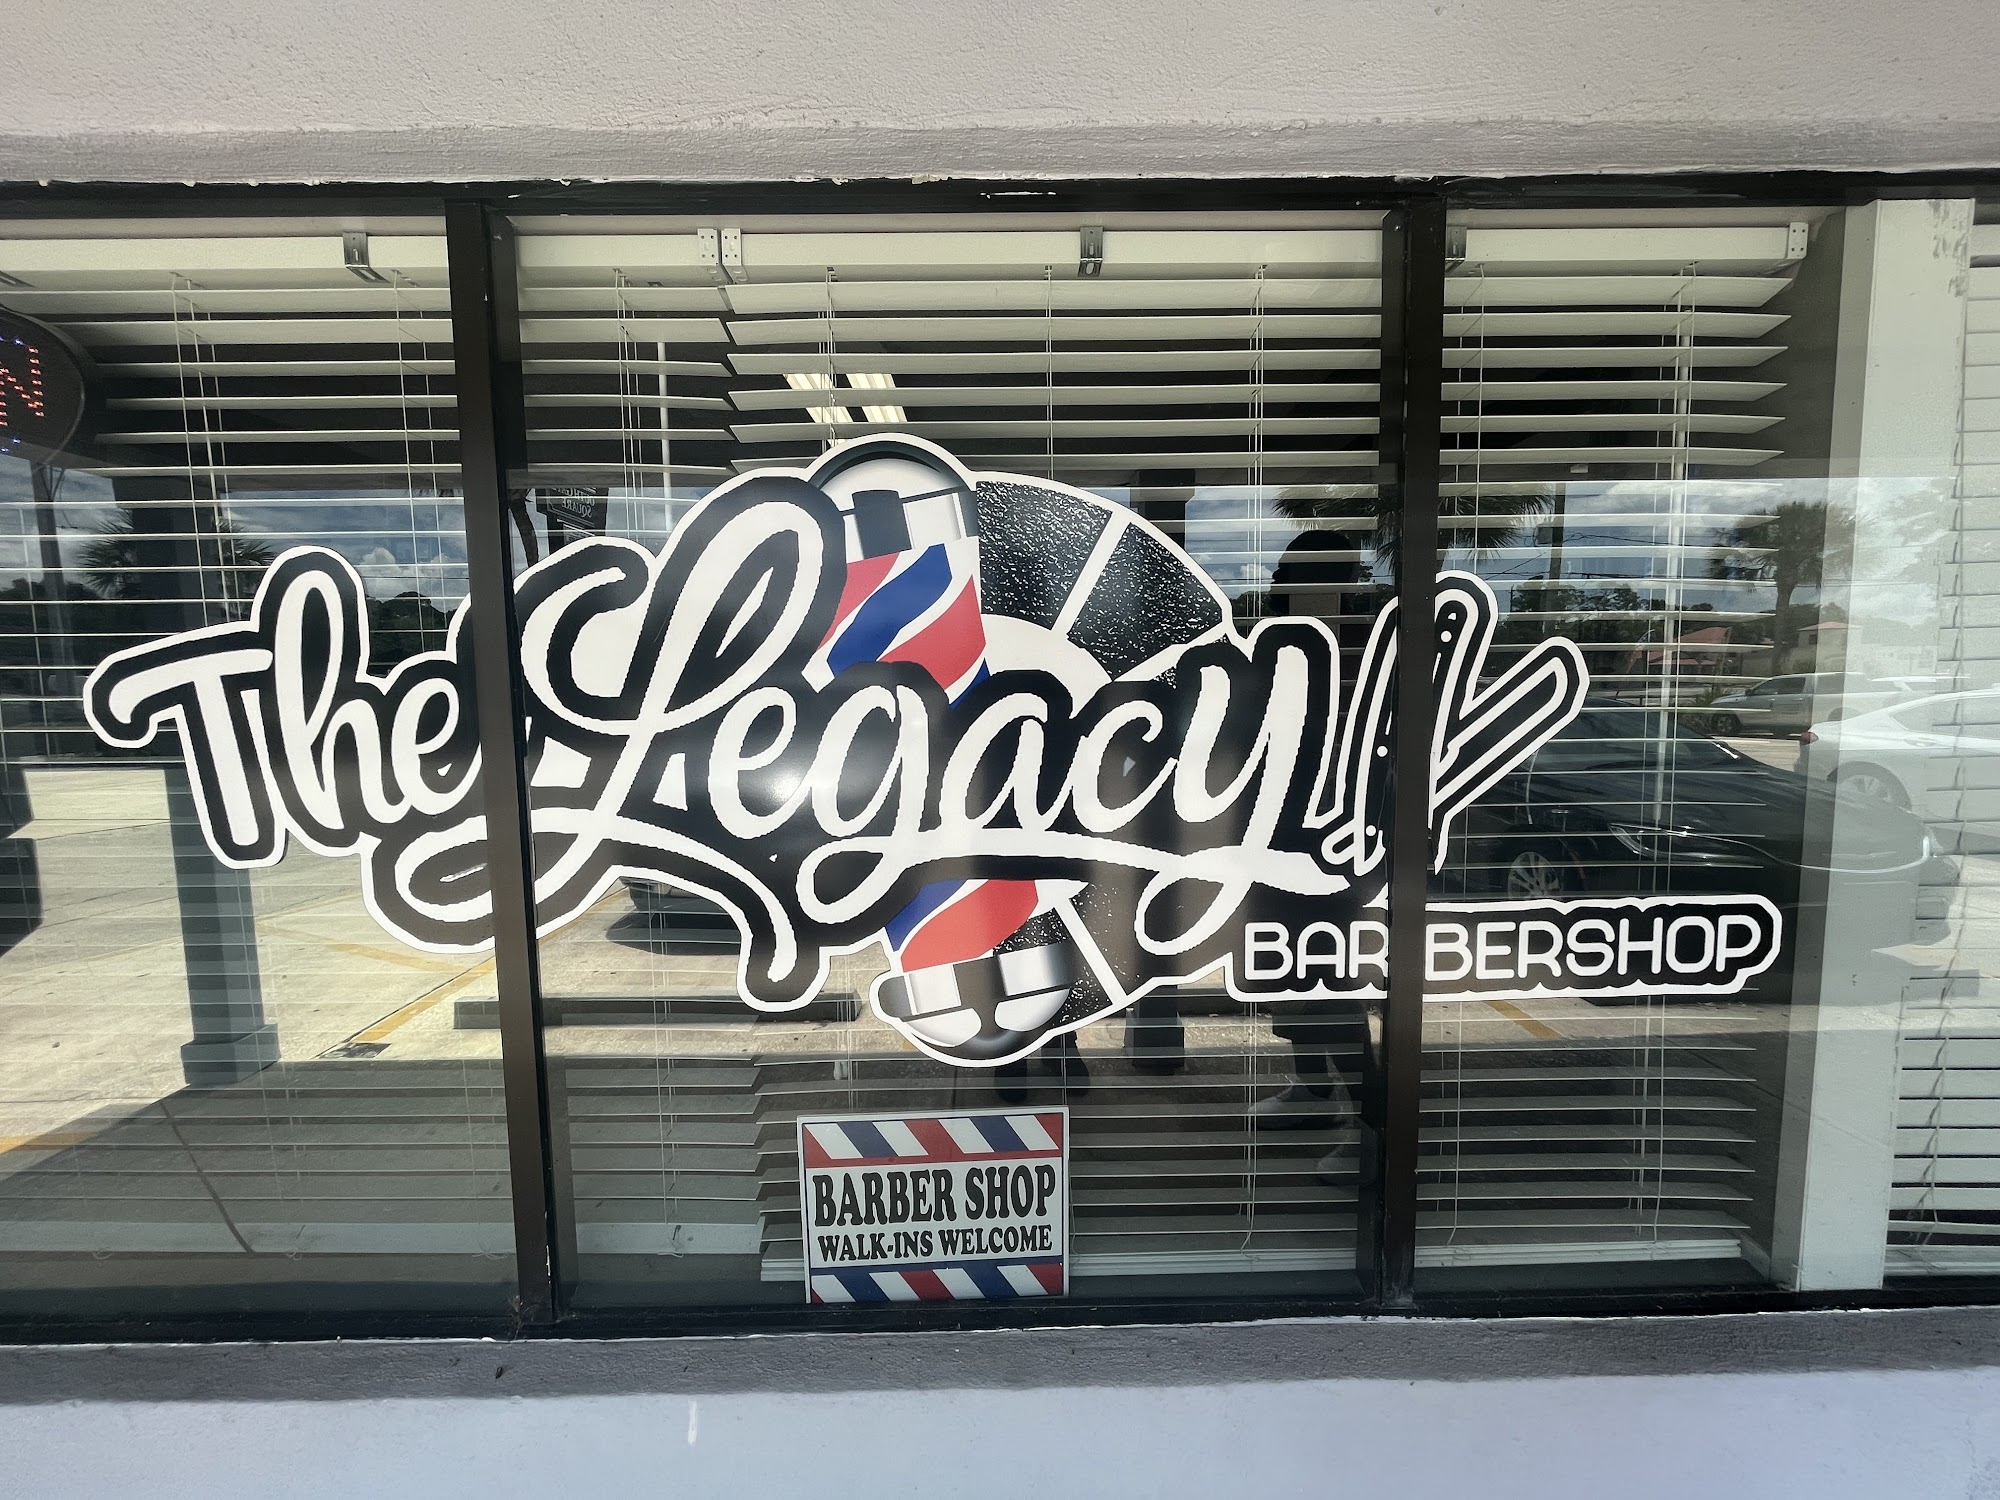 The Legacy Barbershop